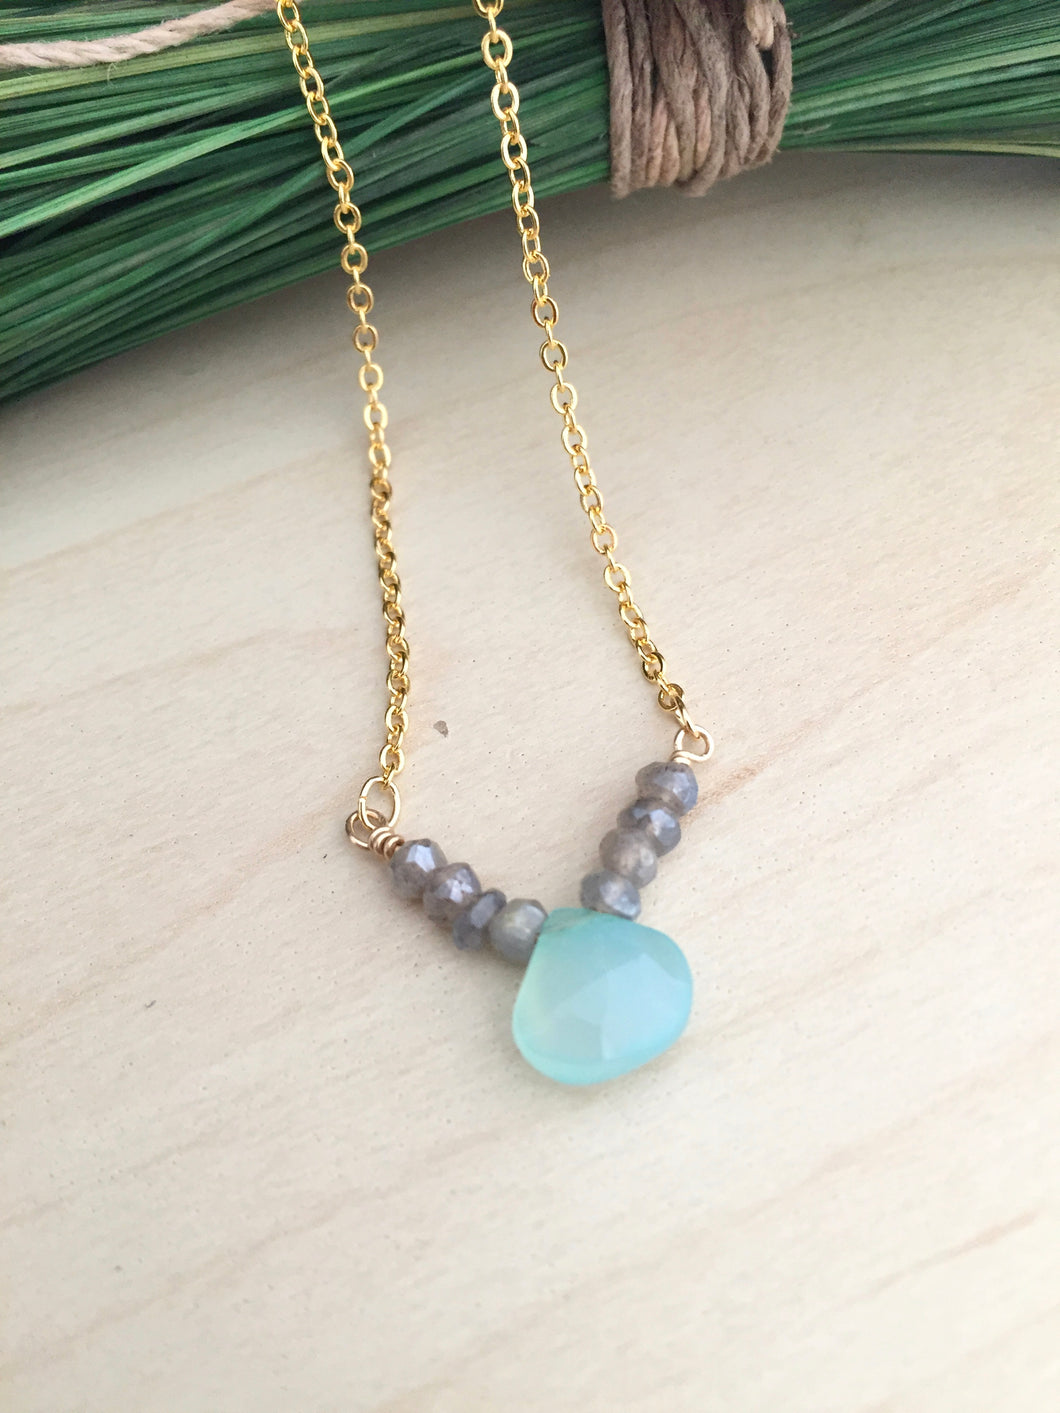 Aqua Chalcedony and grey labradorite v shaped pendant necklace